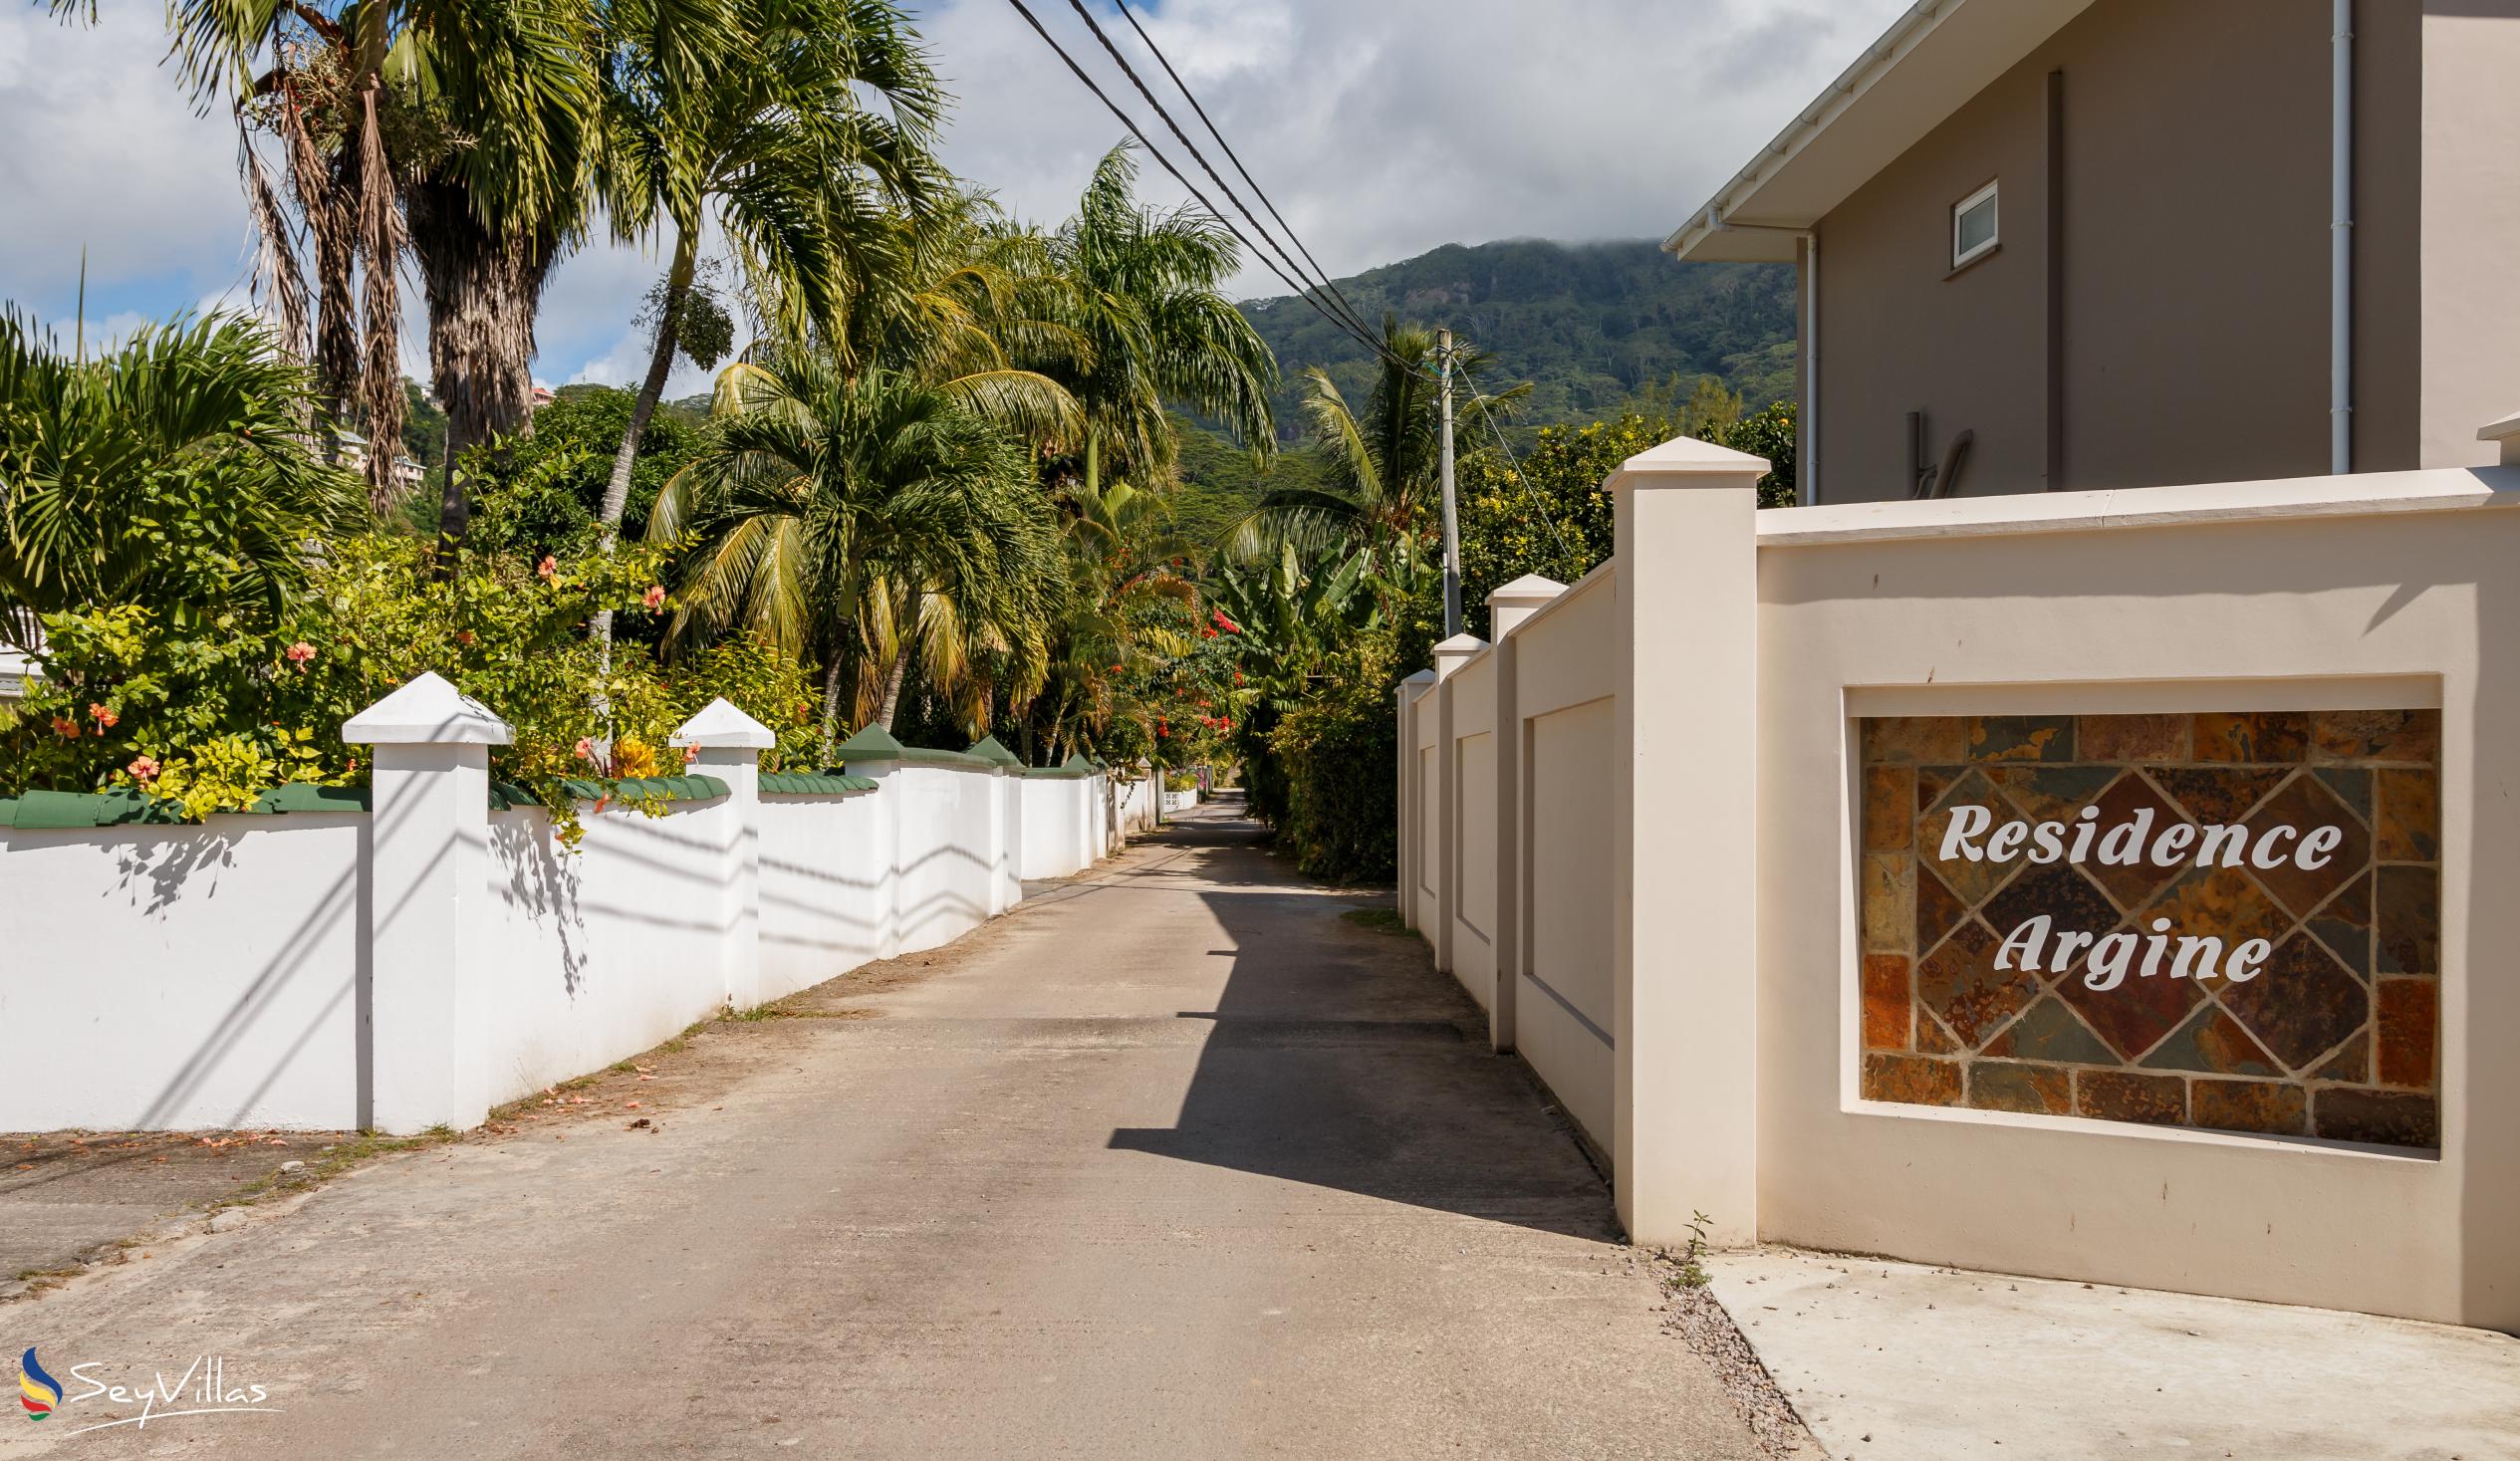 Foto 21: Residence Argine - Posizione - Mahé (Seychelles)